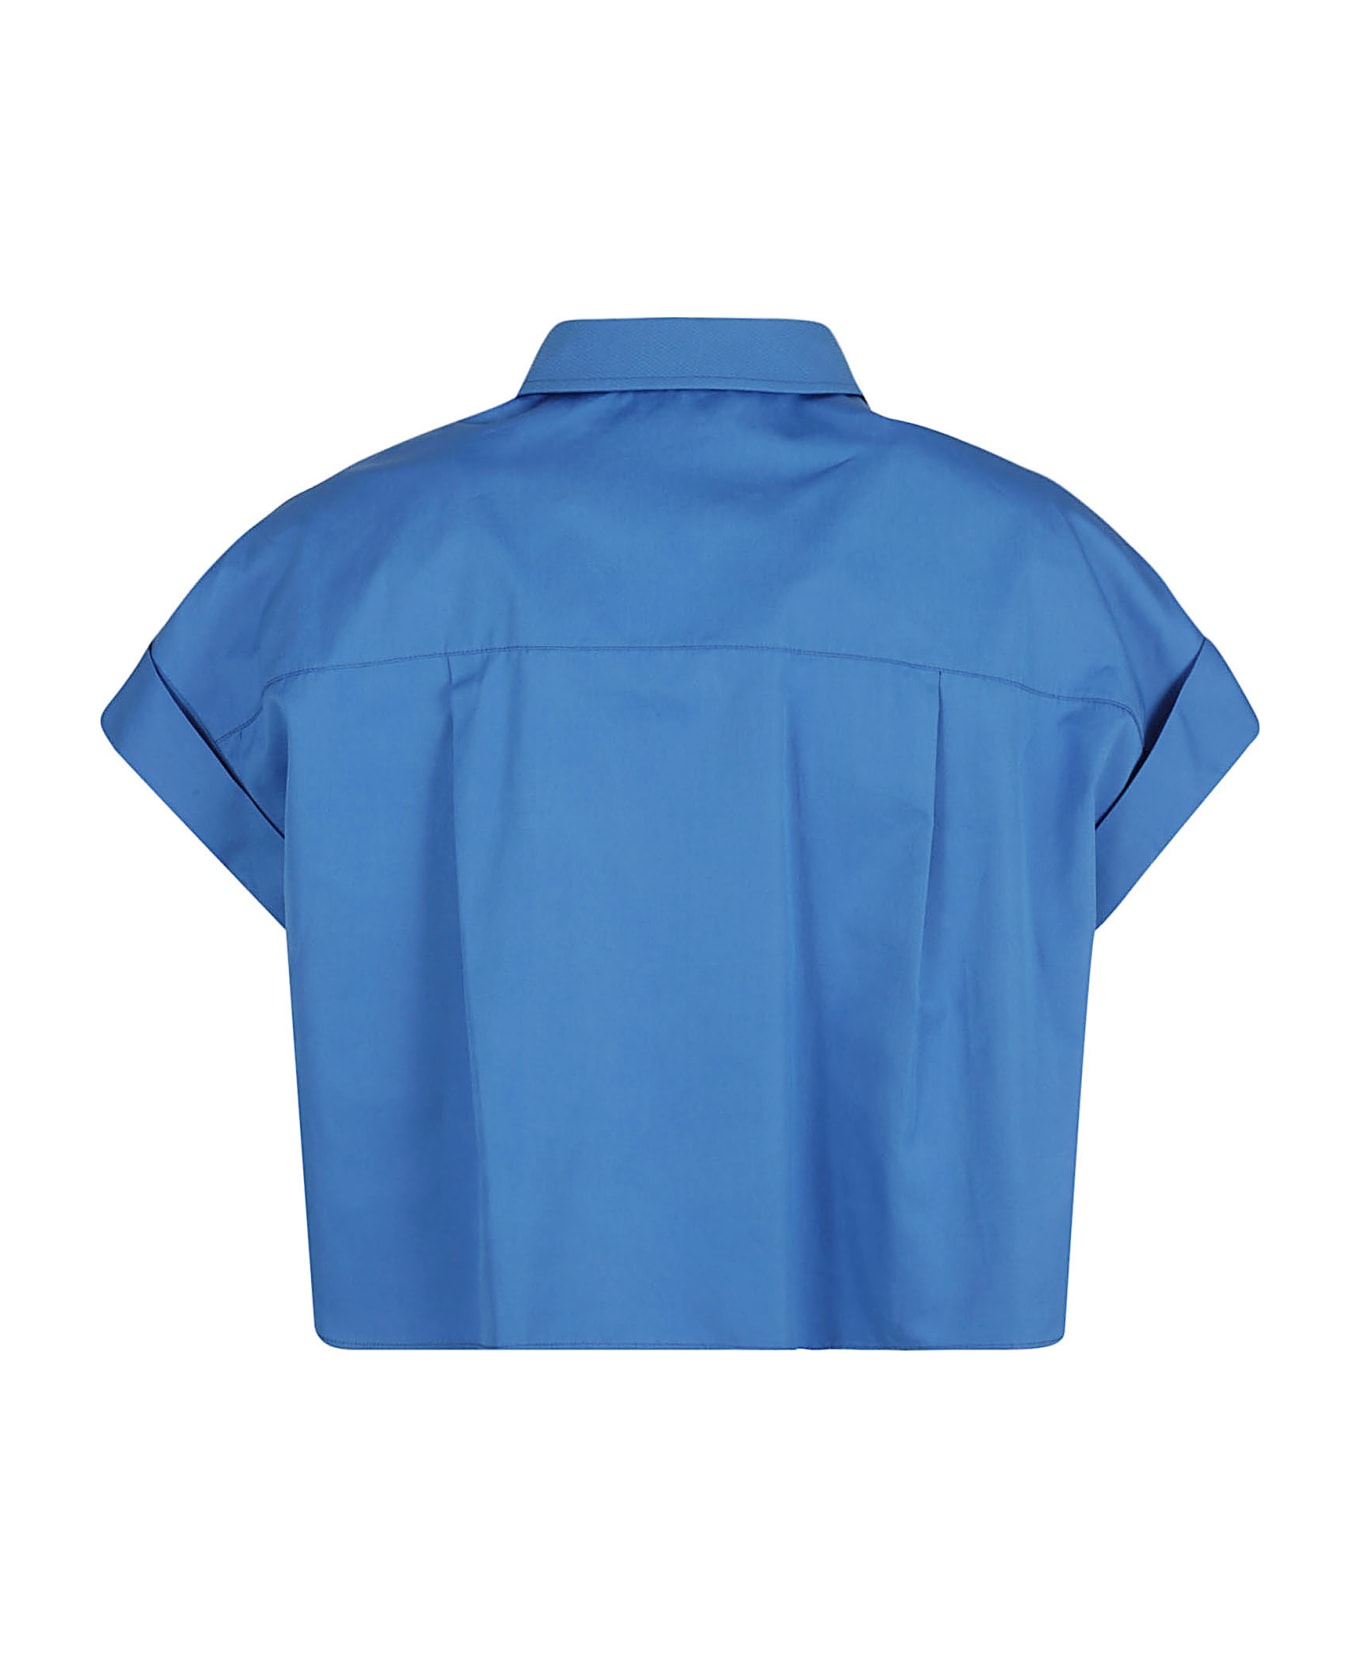 Alexander McQueen Cropped Shirt - Galactic Blue シャツ